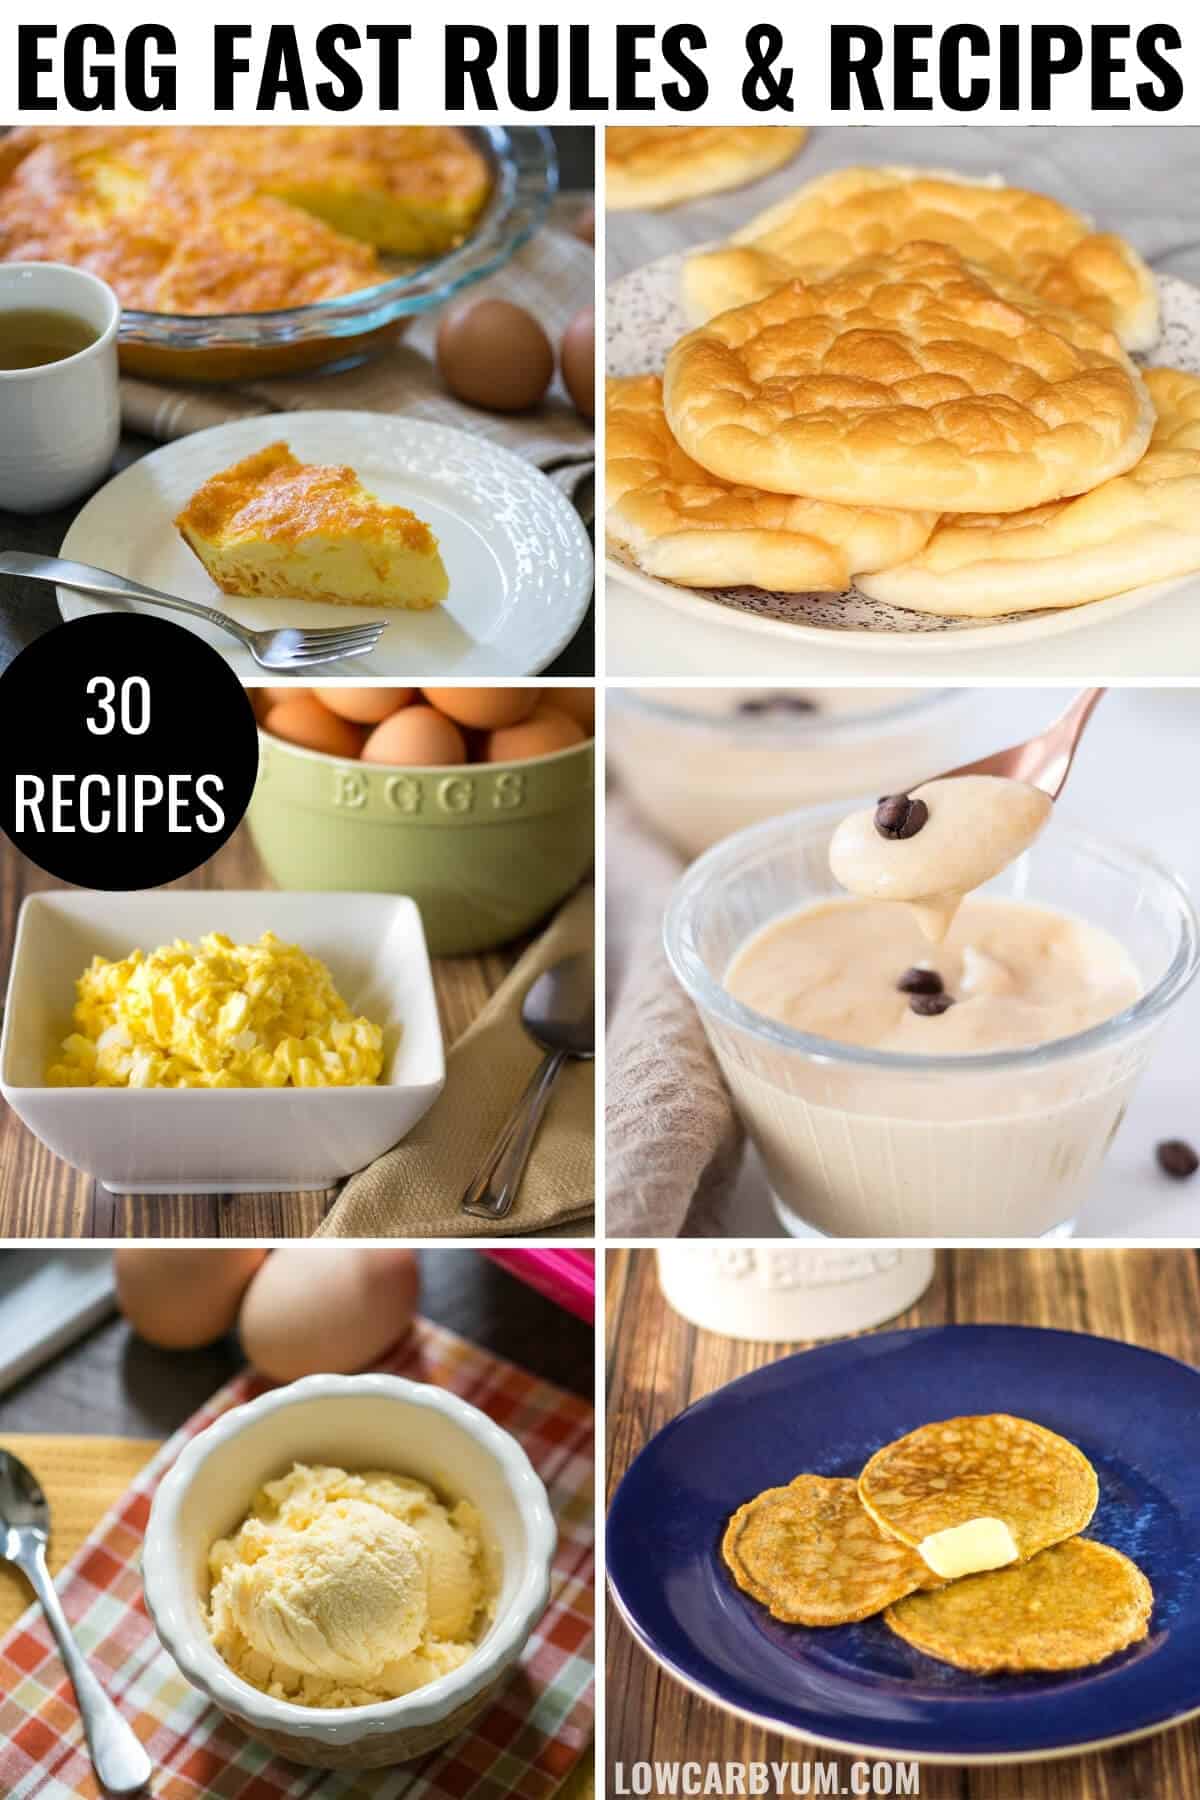 keto egg fast diet recipes cover image